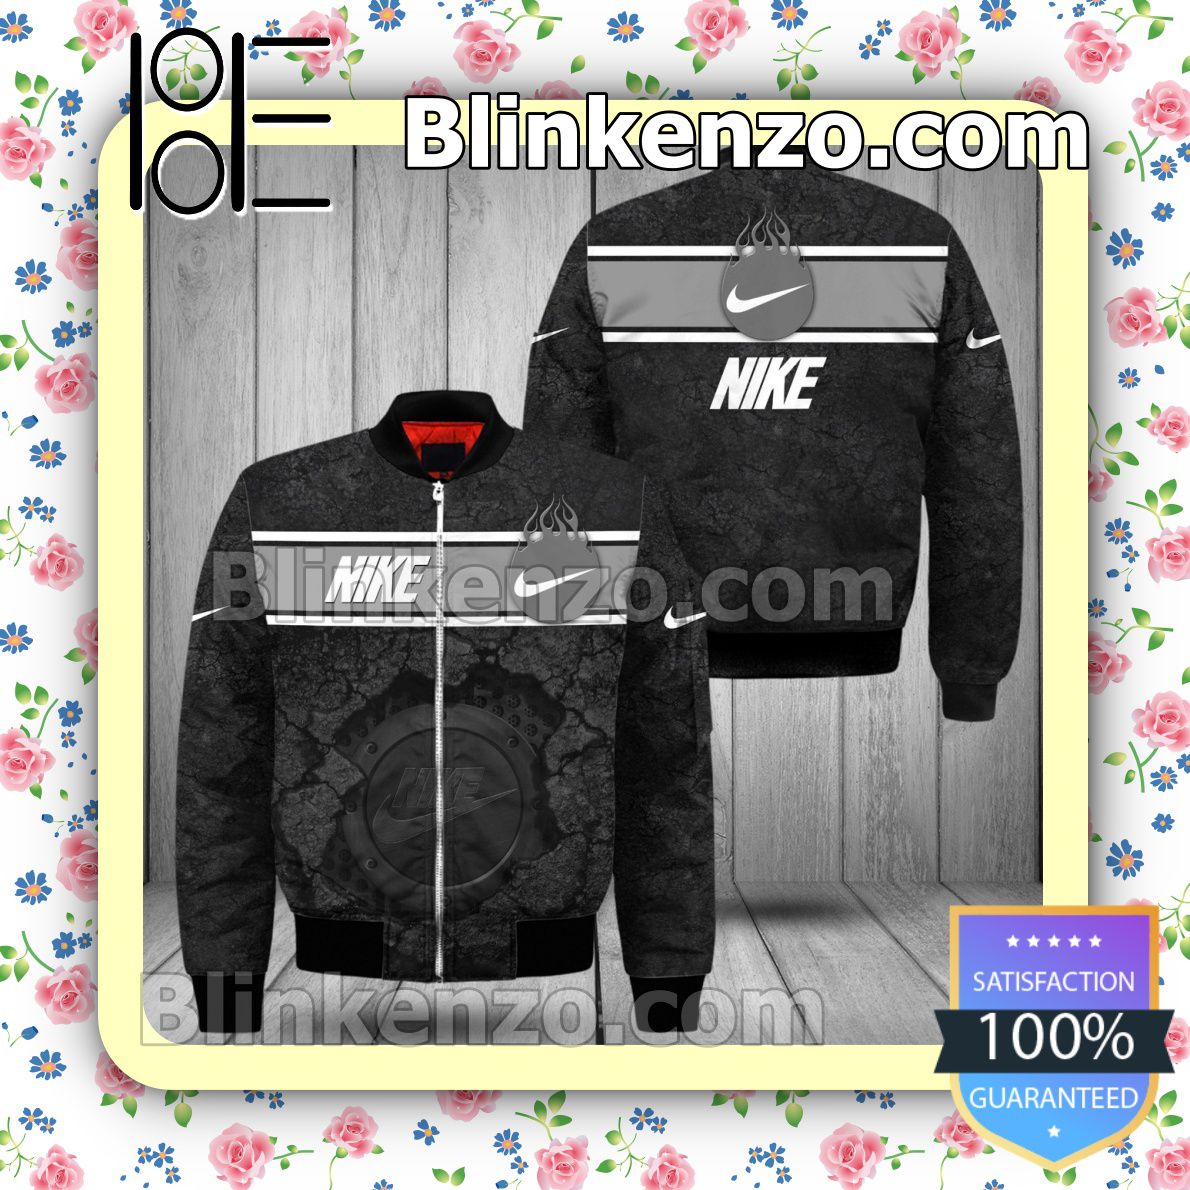 Nike Black Cracked Surface Military Jacket Sportwear